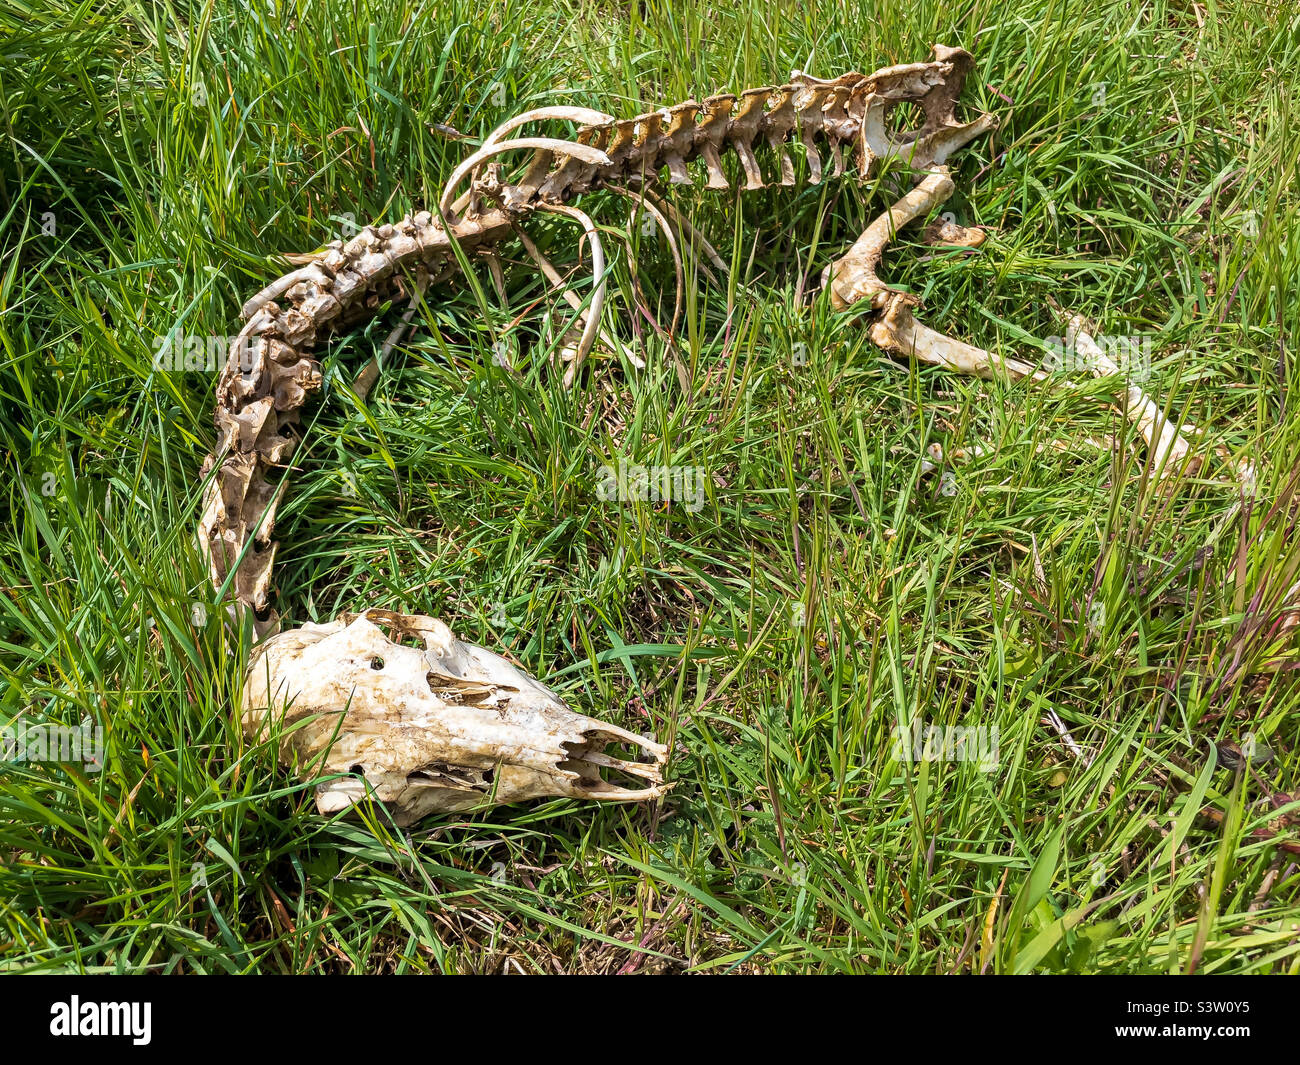 Skeletal remains of muntjac deer Stock Photo